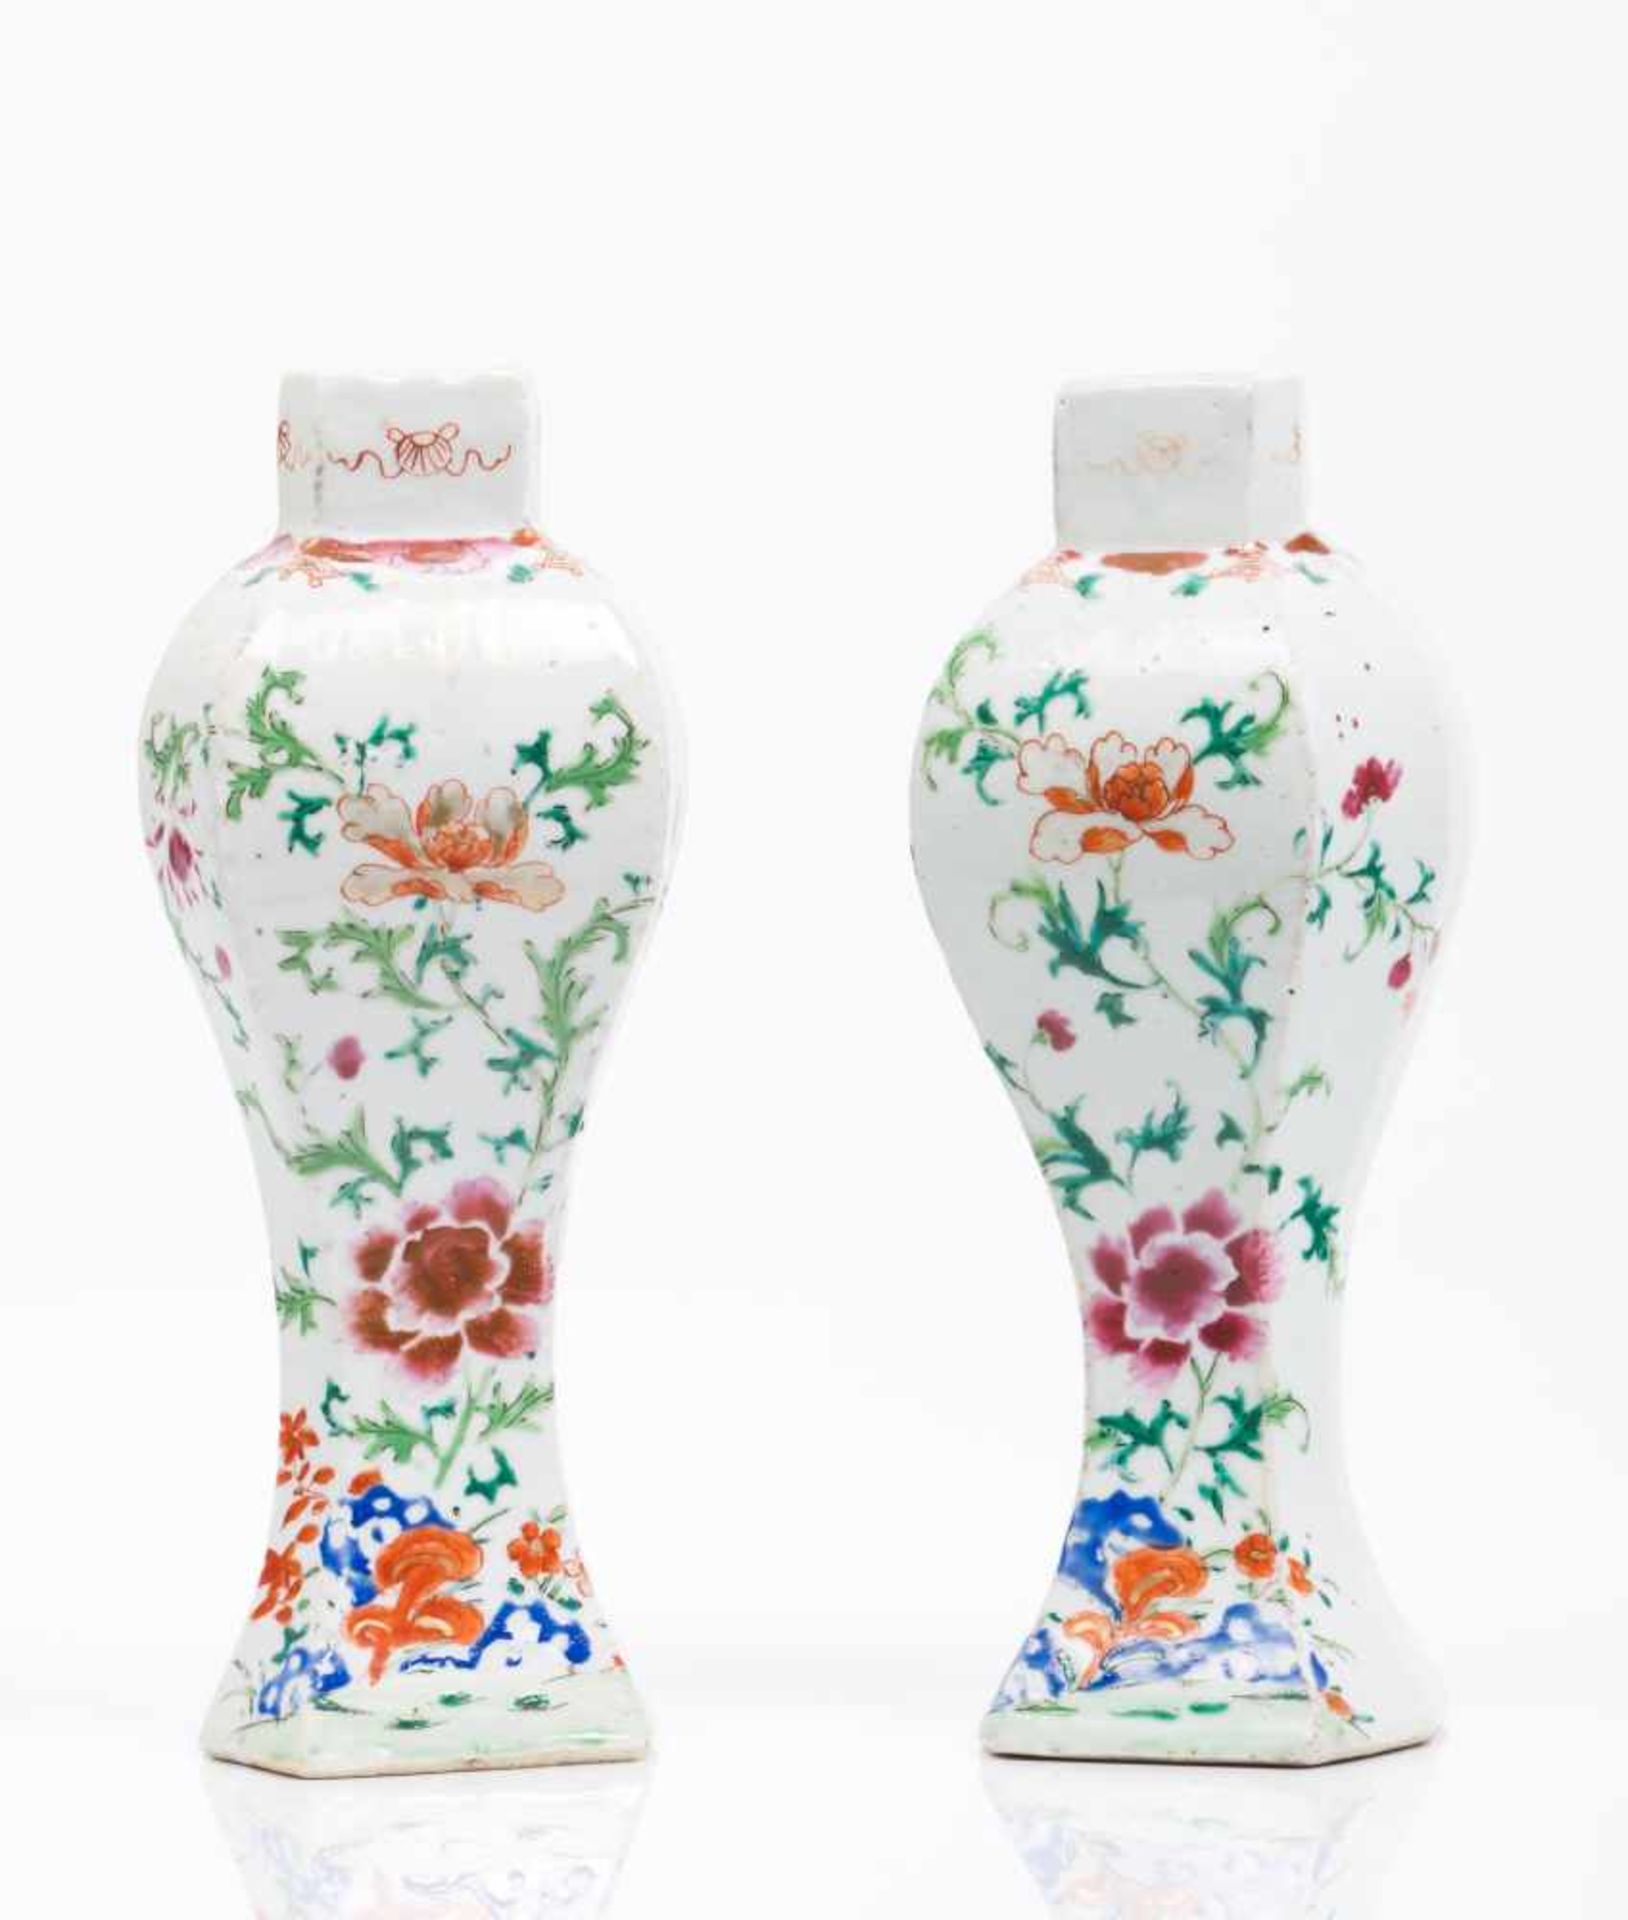 A pair of vasesChinese export porcelainPolychrome "Famille Rose" enamels decoration of garden